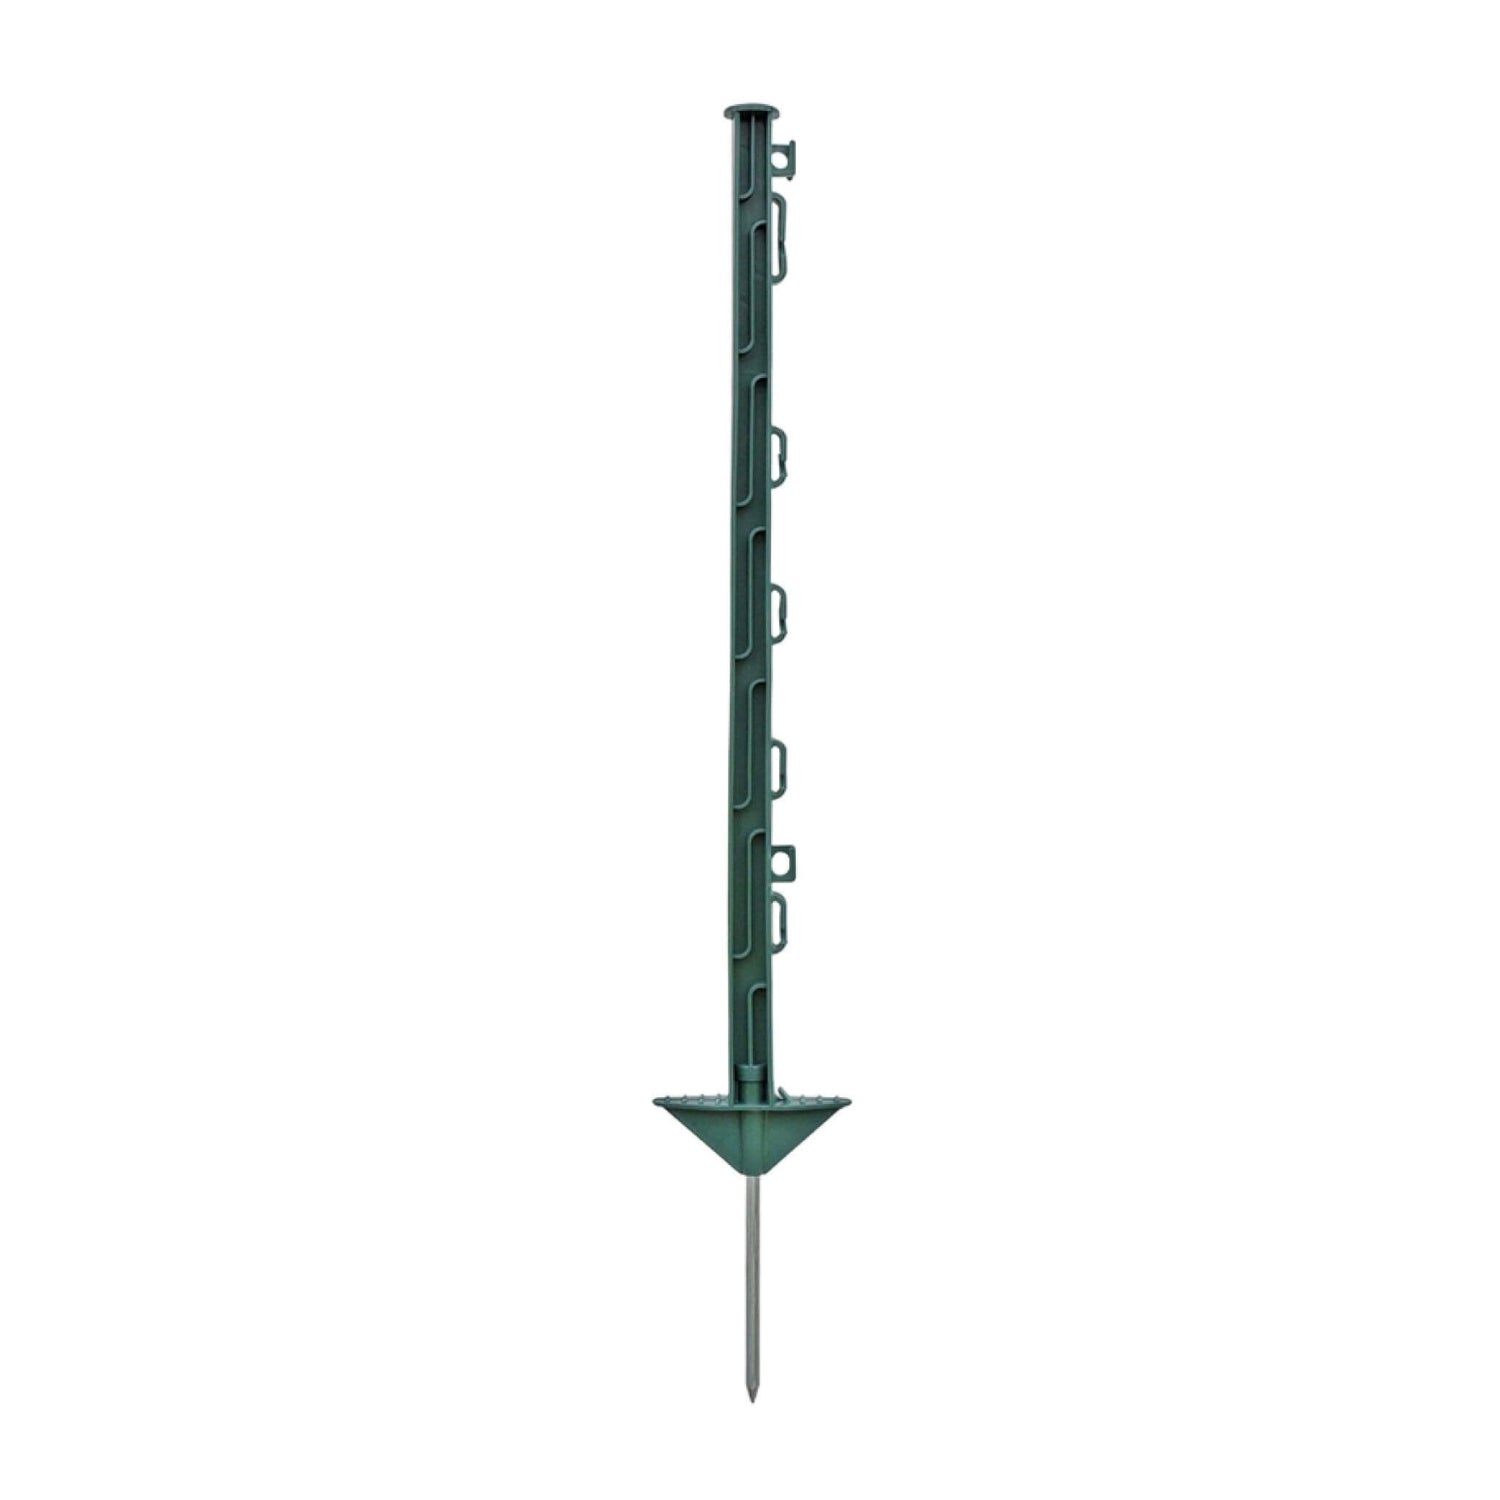 Plastic stake for electric shepherd, 74 cm